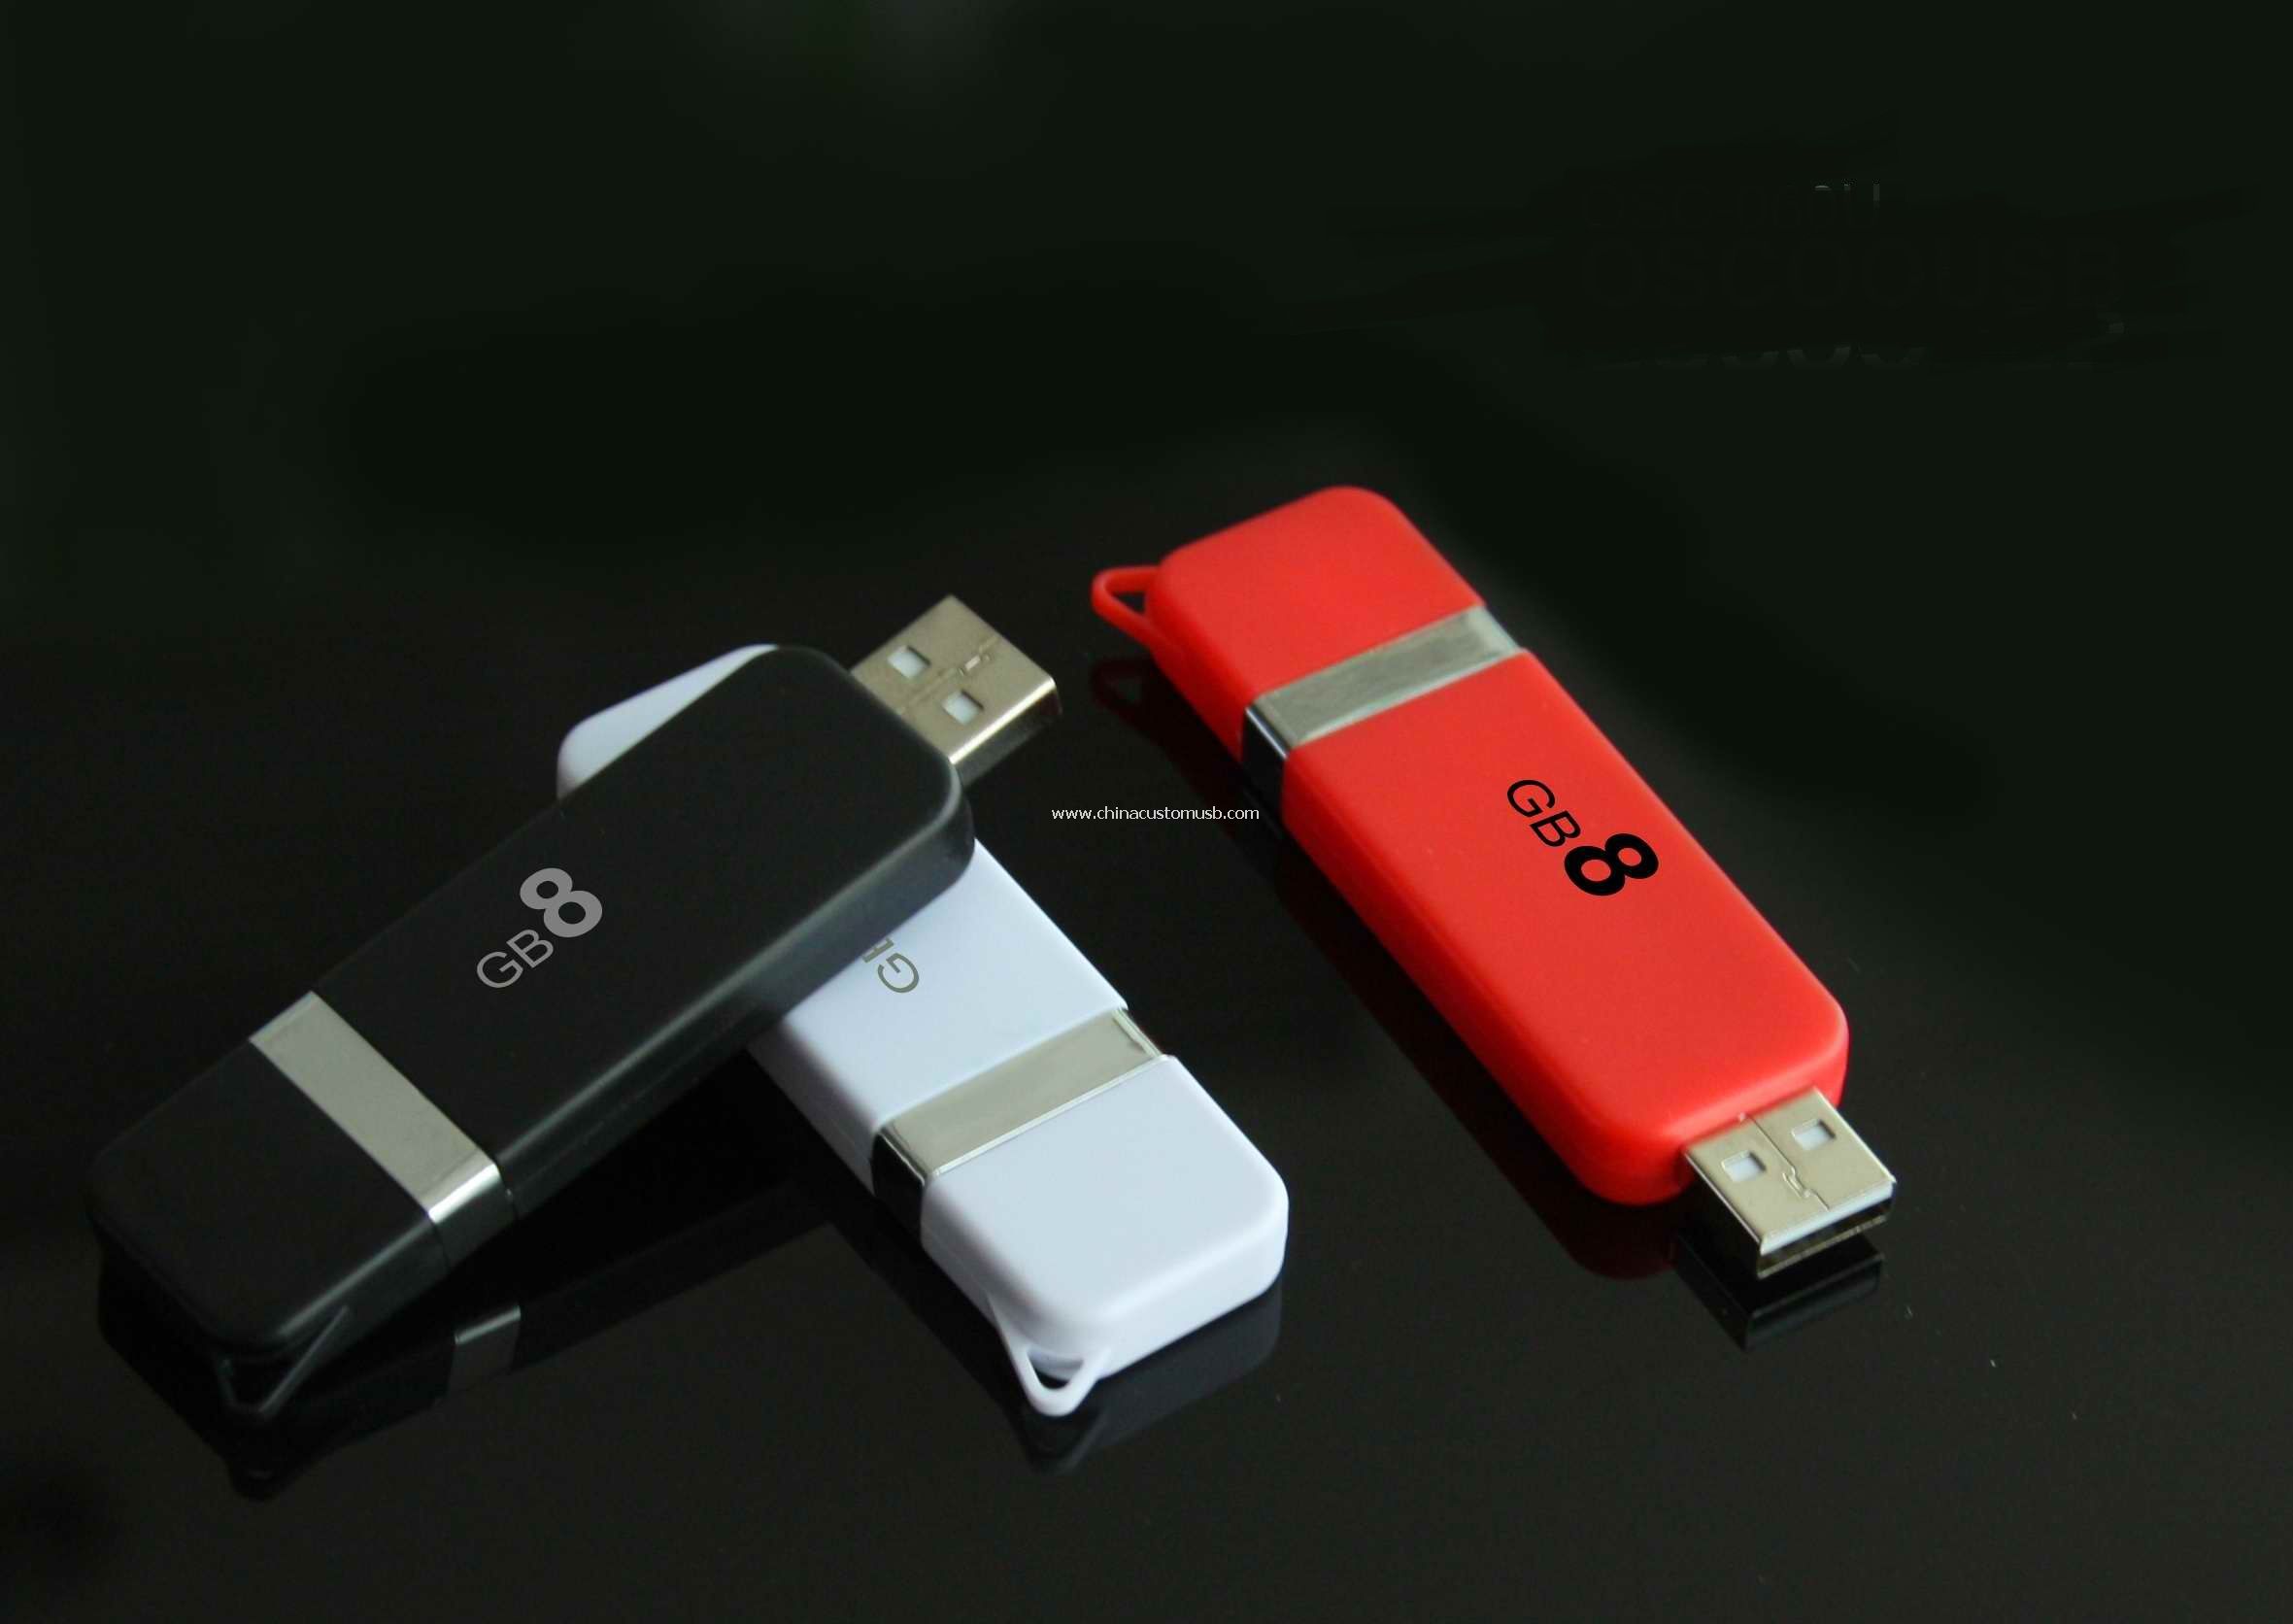 ABS USB hujaus ajaa